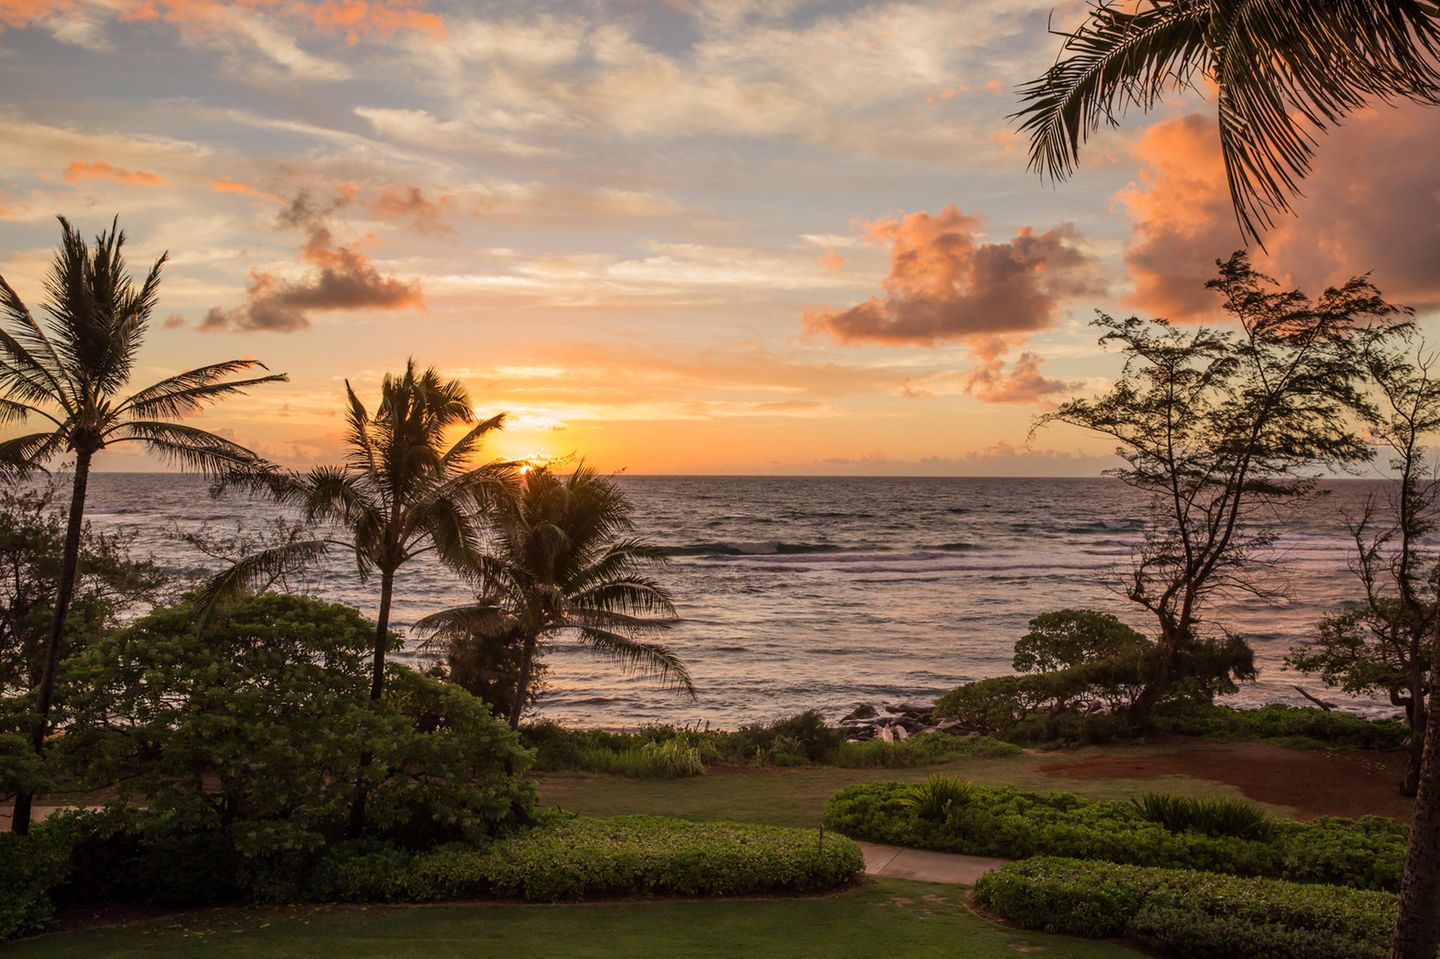 2) Angesagte Reiseziele: Kapa'a, Hawaii